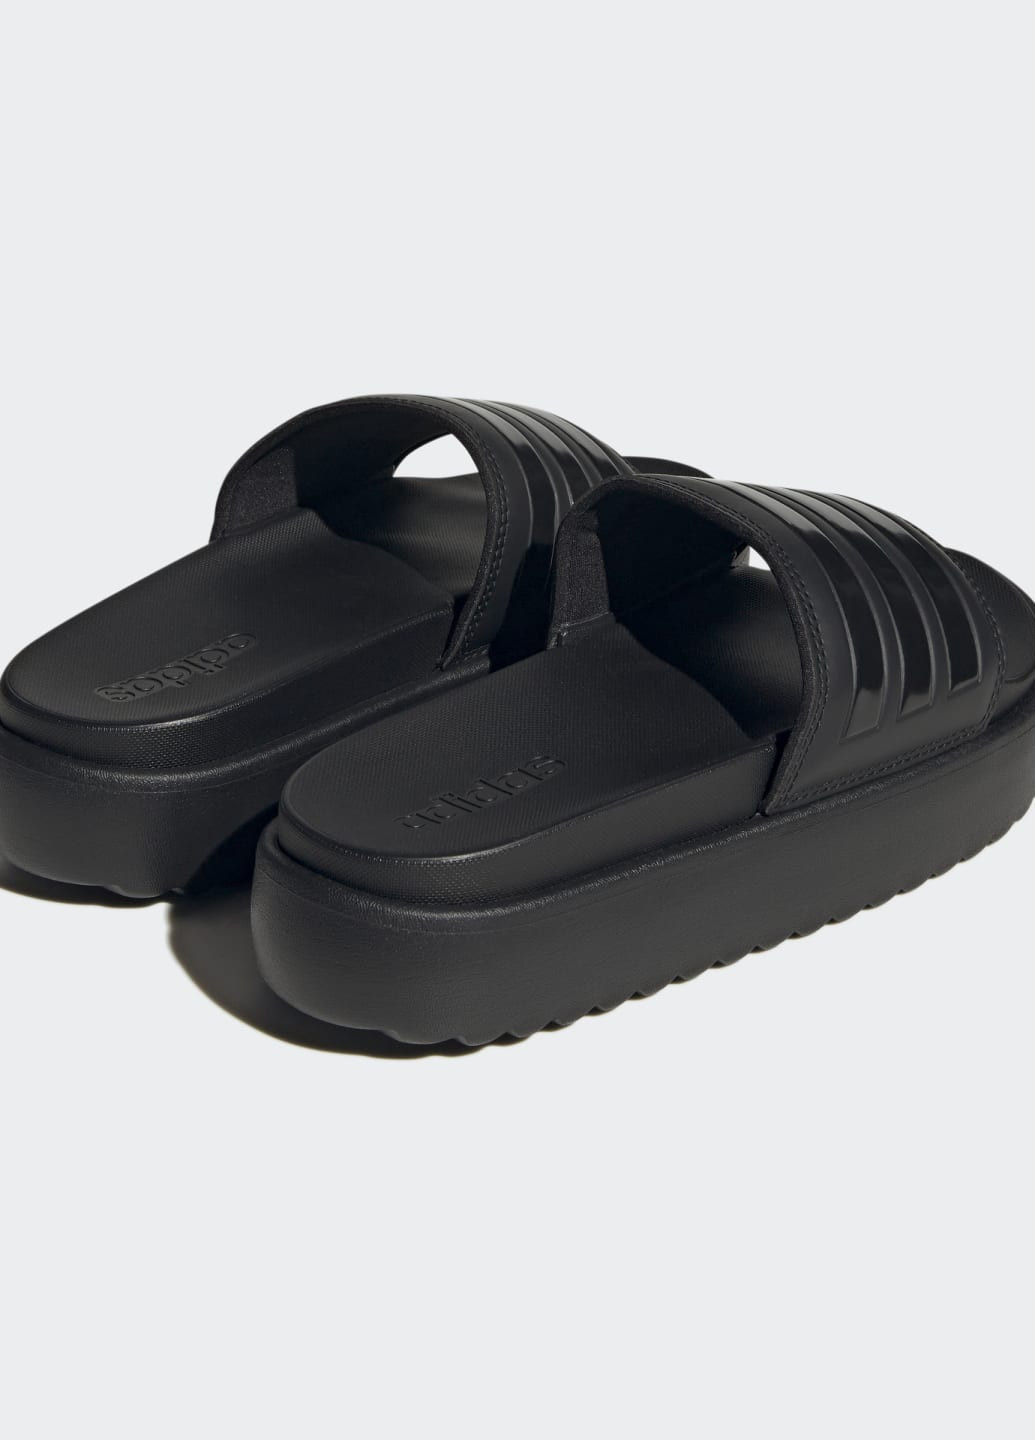 Черные шлепанцы adilette platform adidas